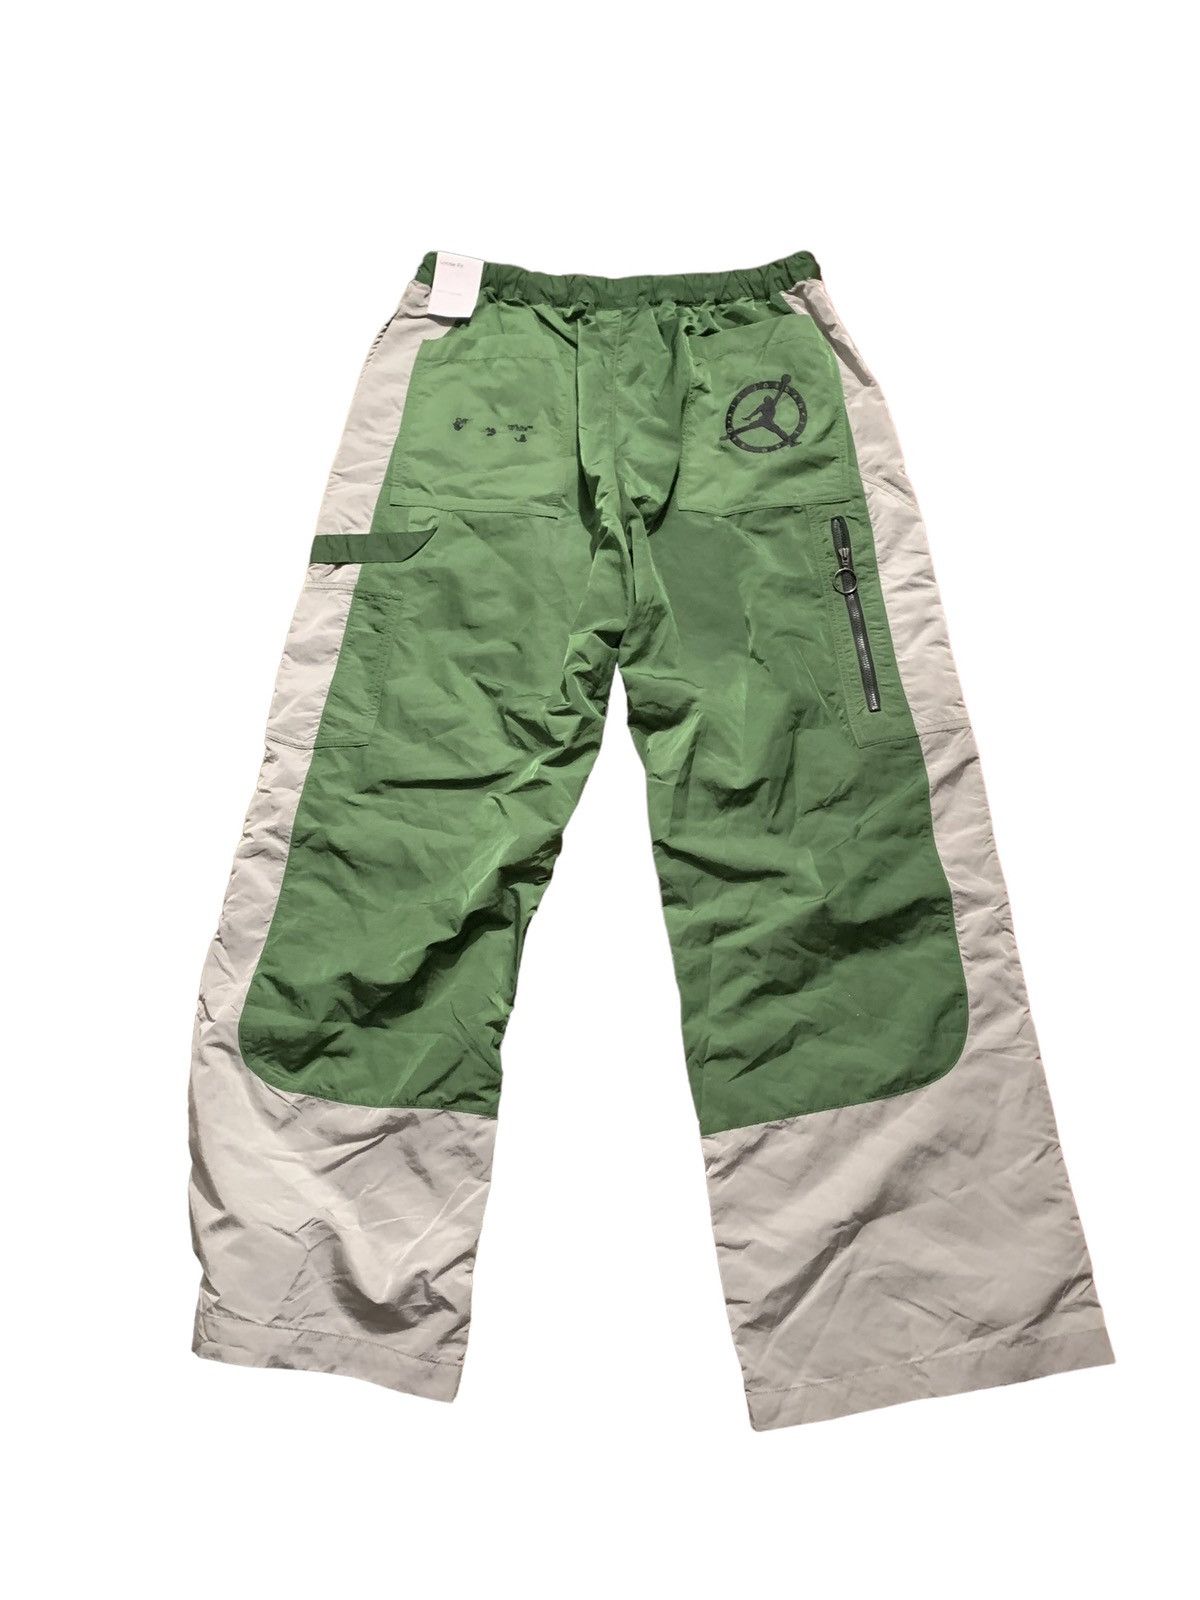 Jordan Brand Off White Jordan Track Pants in Grey Green Size US 34 / EU 50 - 2 Preview